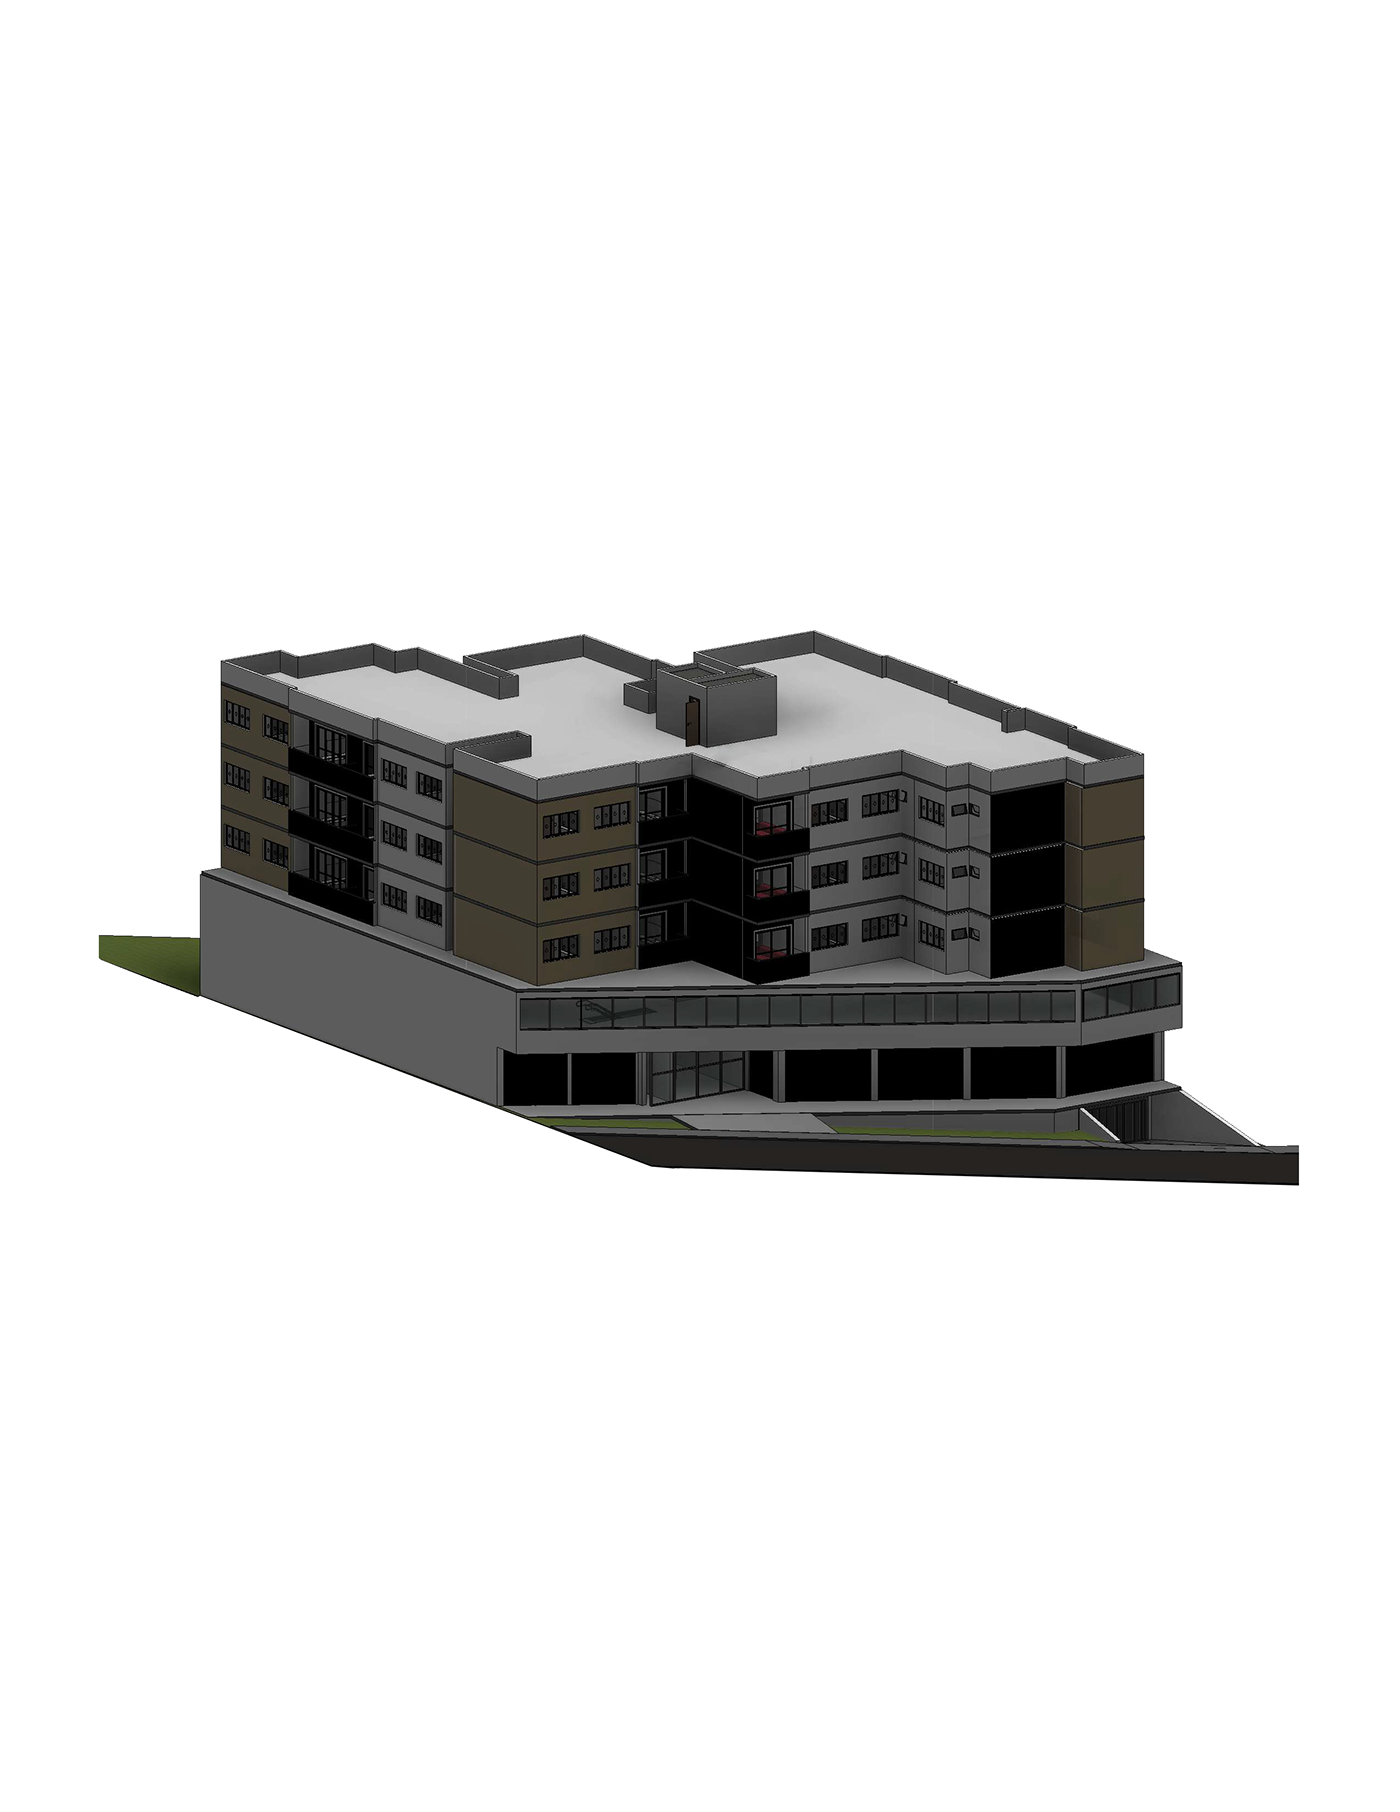 ARQUITETURA building comercial edificio Modelagem 3D modelo 3d prédio Render Residencial revit